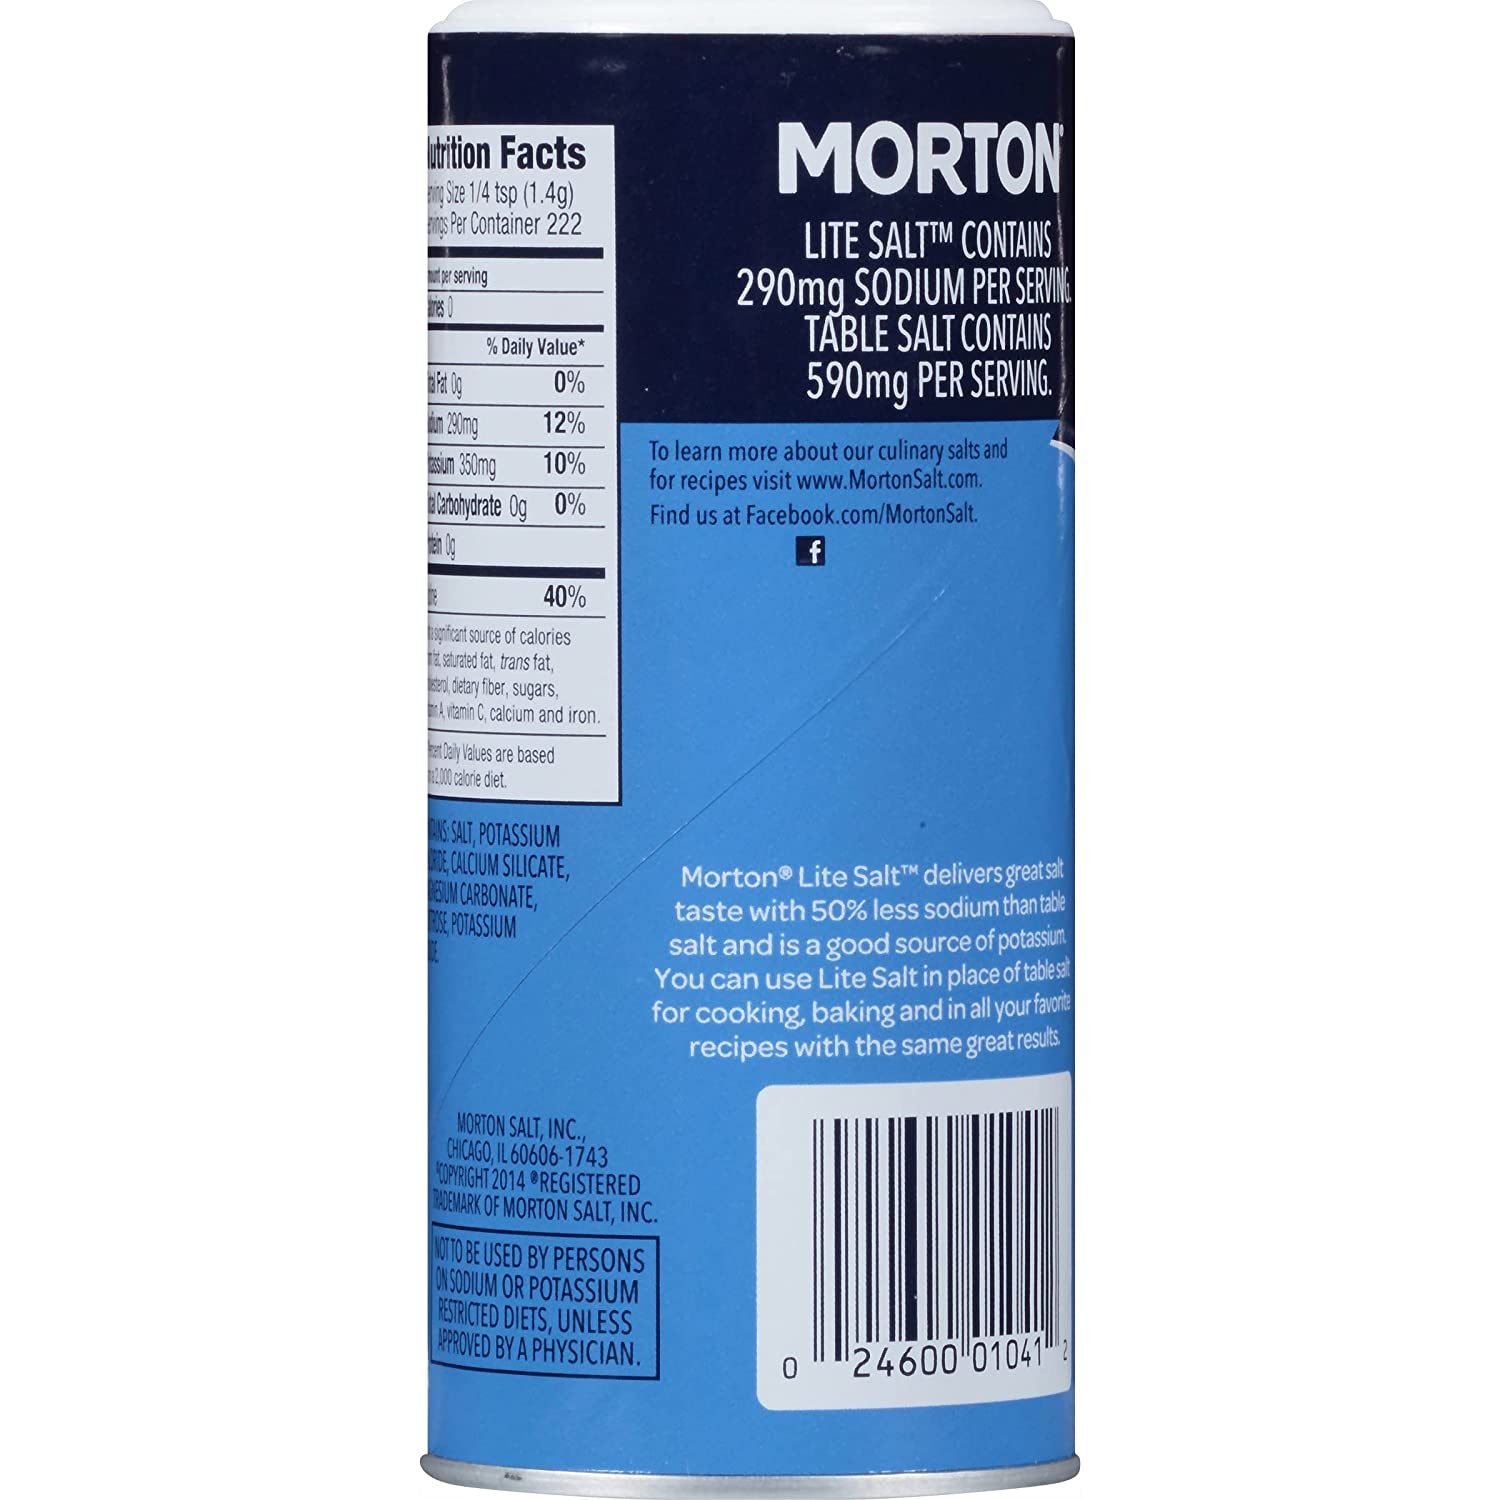 Morton Nature's Seasons Seasoning Blend, 7.5 Ounce (2 pack) w/Custom CMC  Measuring Spoon 1tbsp & 1tsp